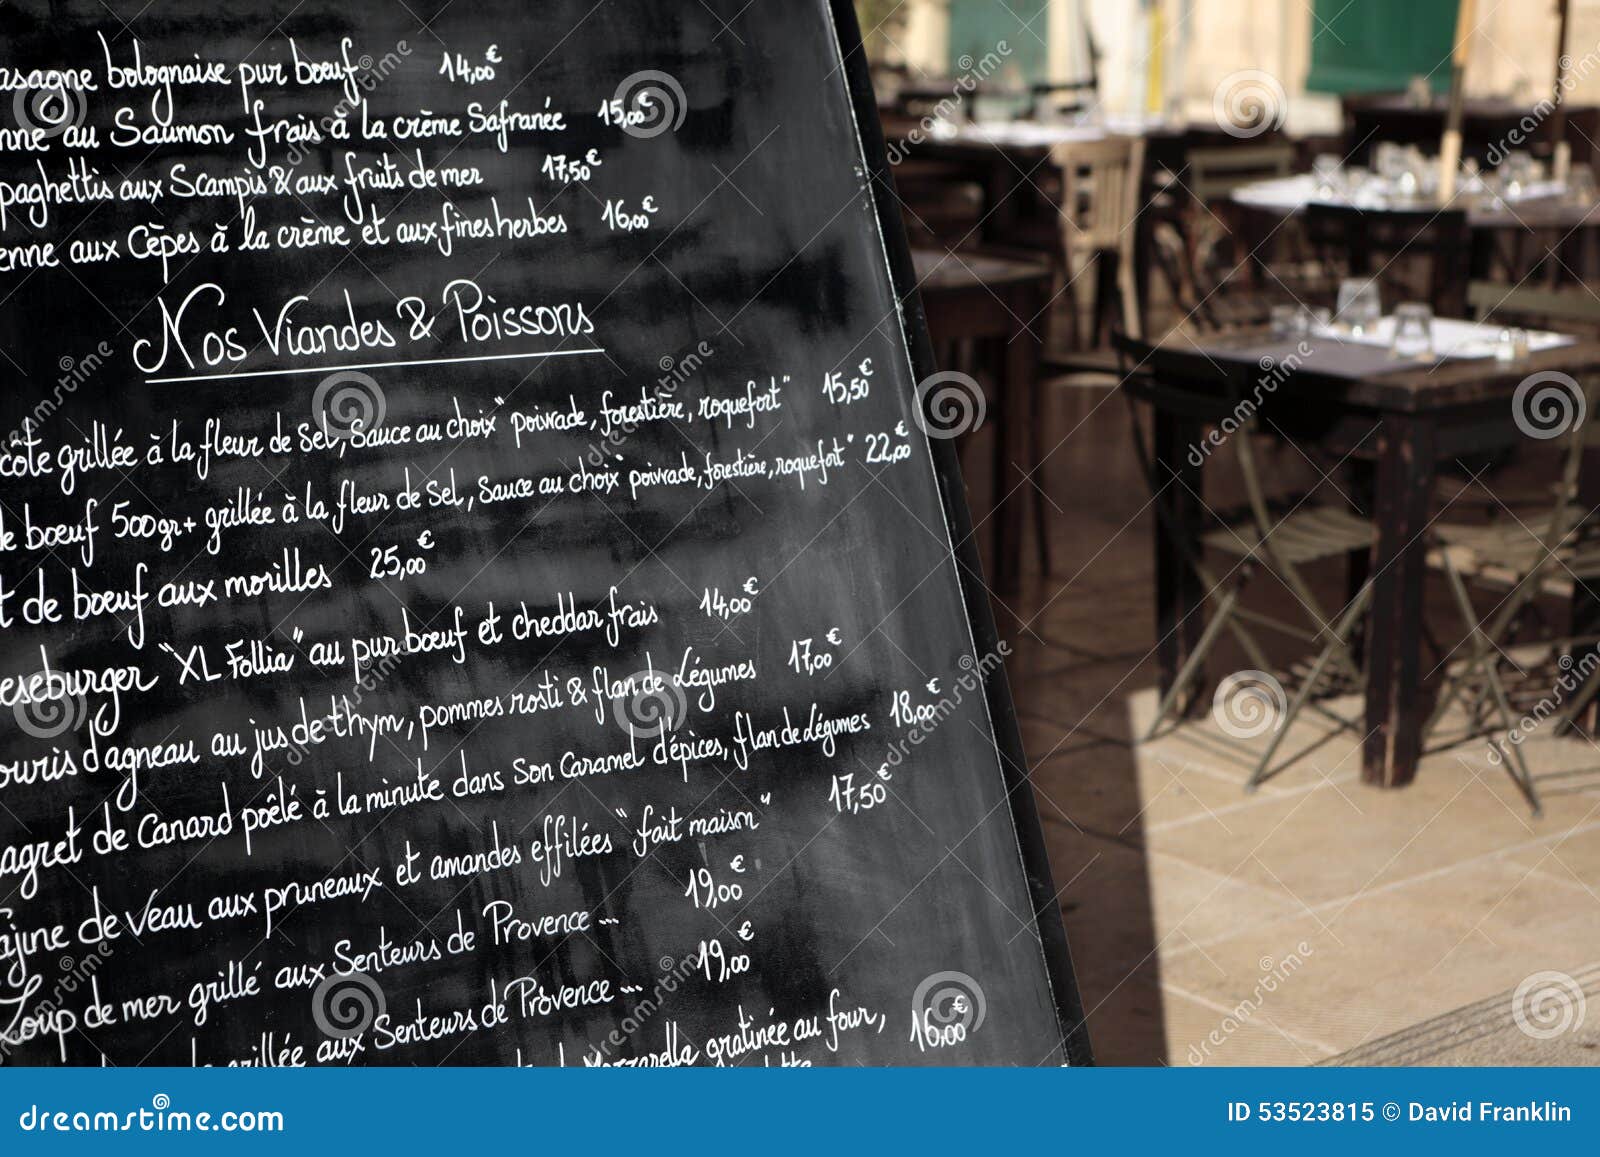 paris restaurant menu board france 53523815